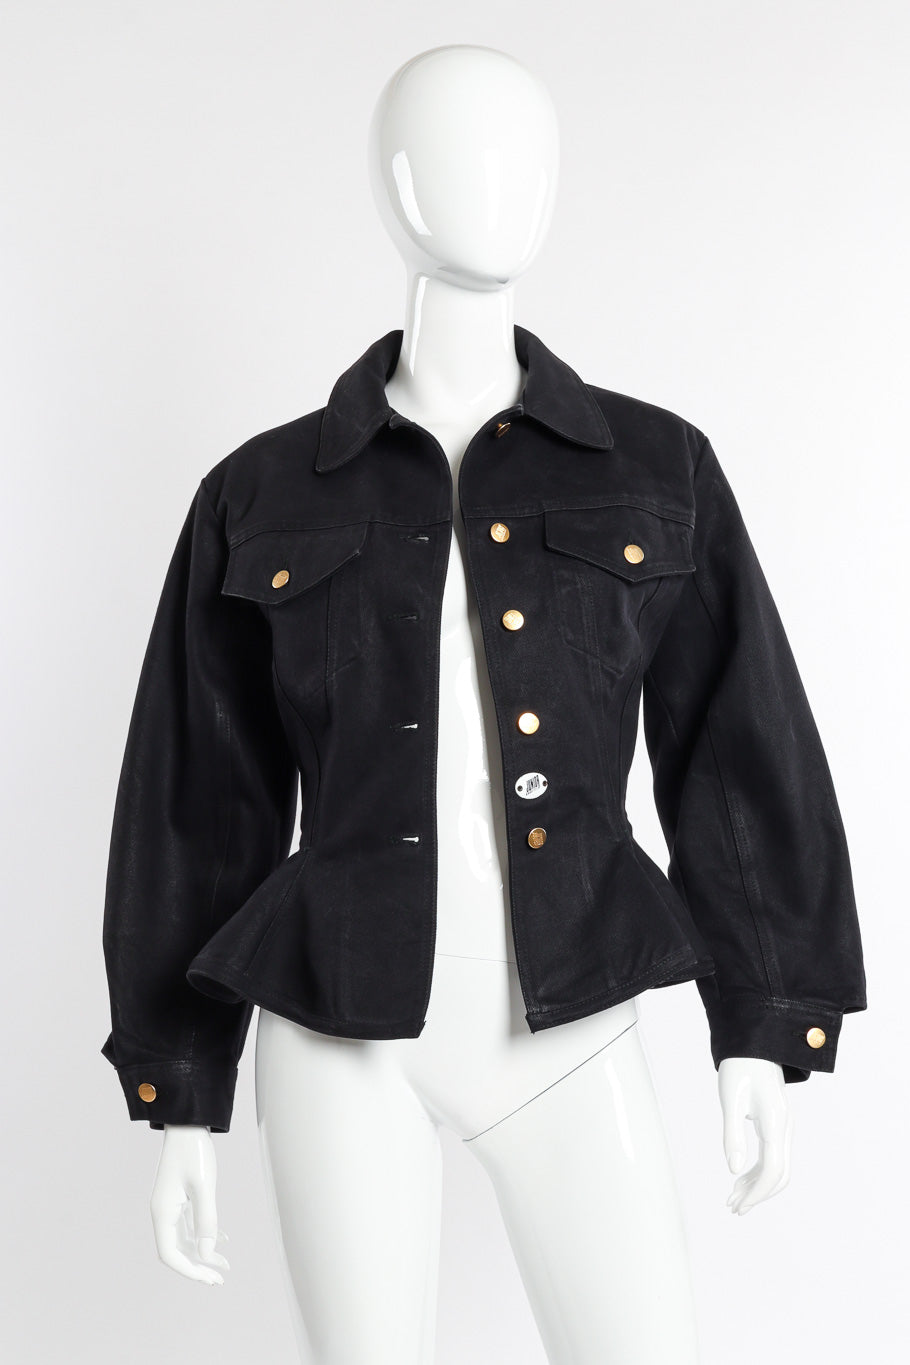 Junior Gaultier Denim Peplum Jacket front unbuttoned on mannequin @recessla